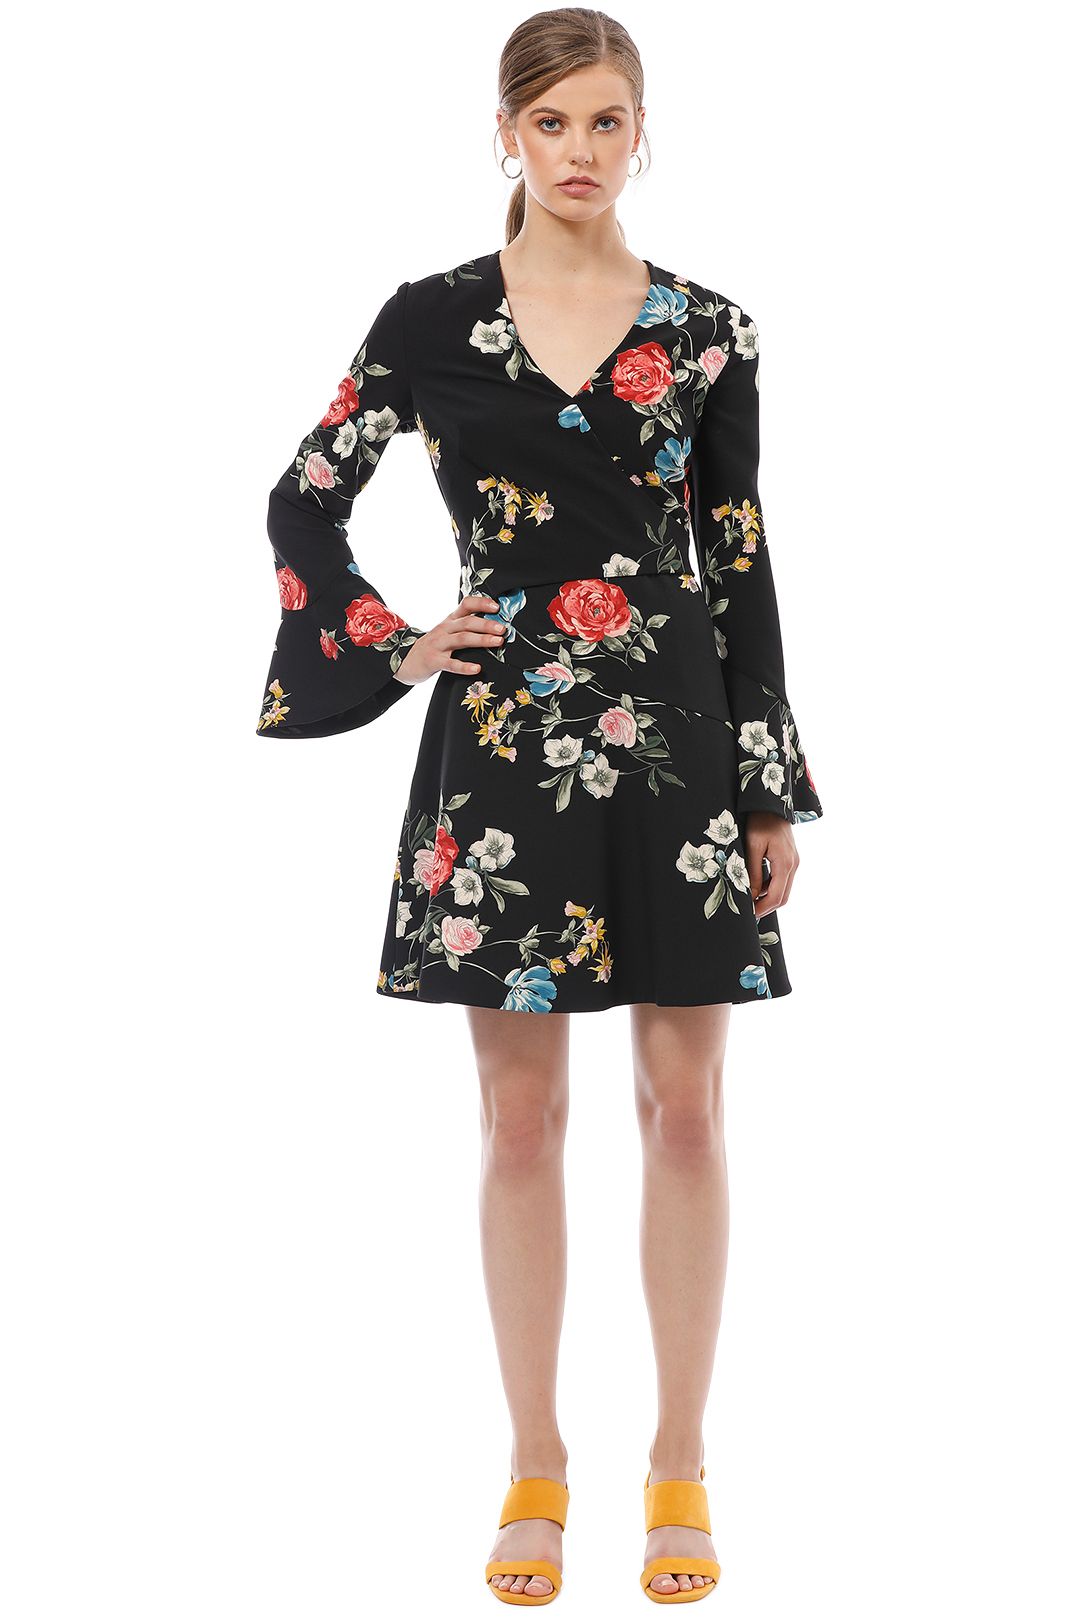 Cue - Watercolour Rose Long Sleeve Dress - Black Floral - Front